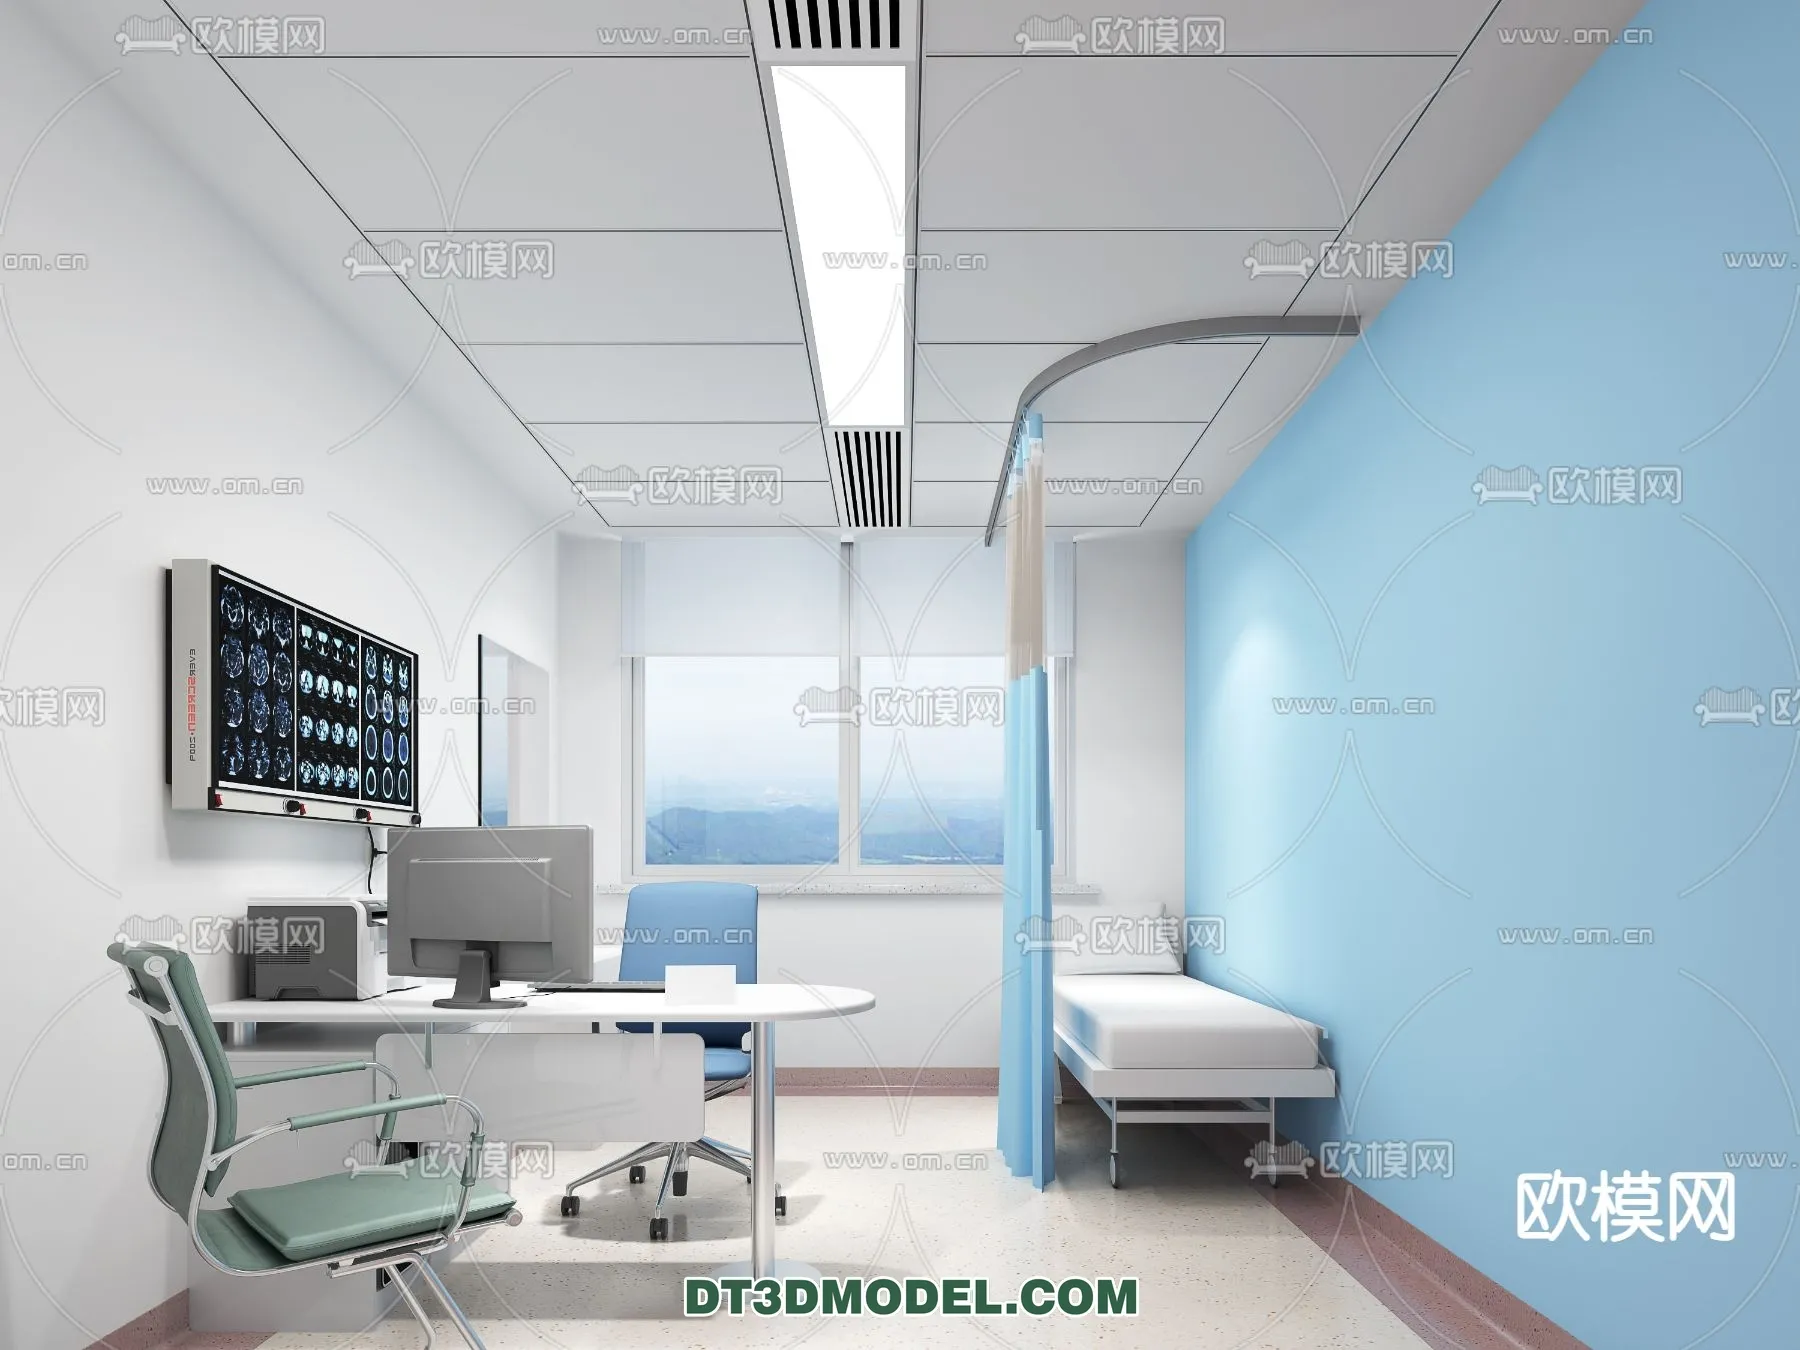 HOSPITAL 3D SCENES – MODERN – 0121